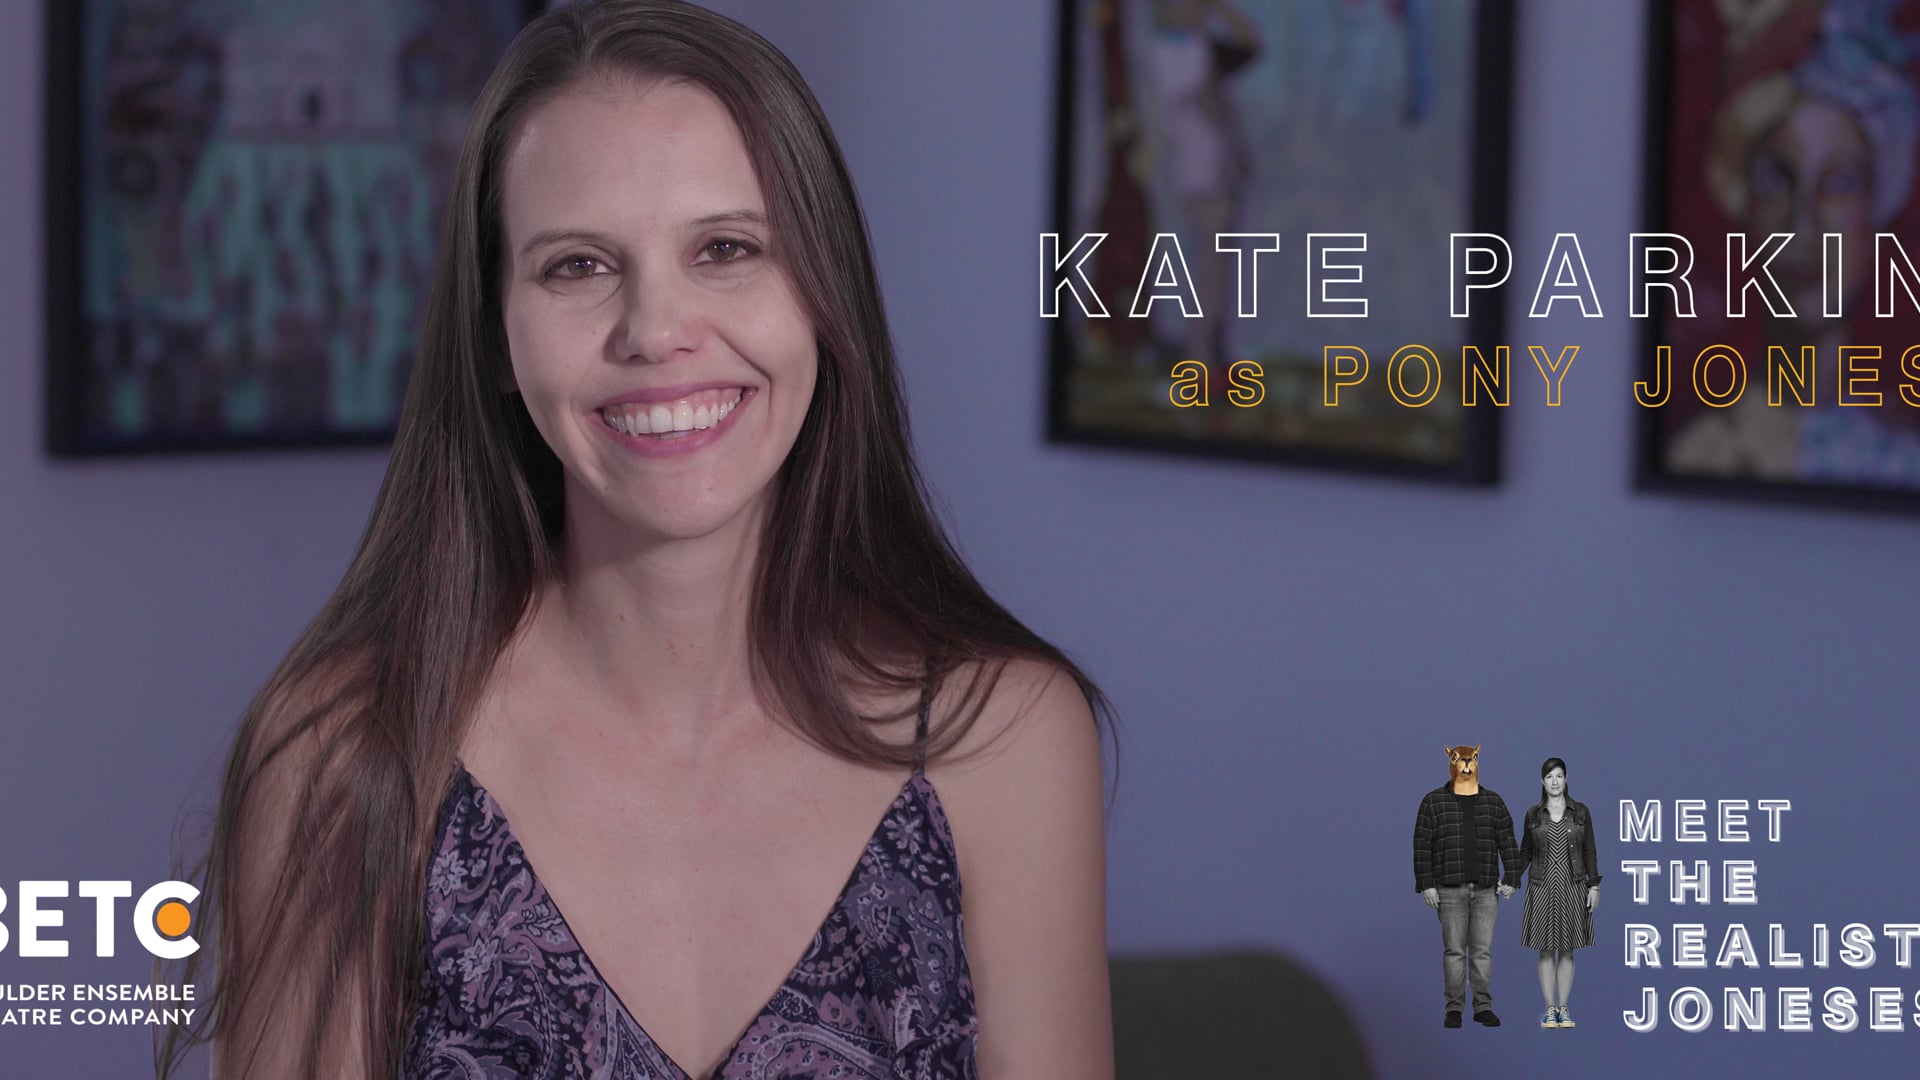 Meet "The Realistic Joneses" (Kate Parkin as Pony Jones)